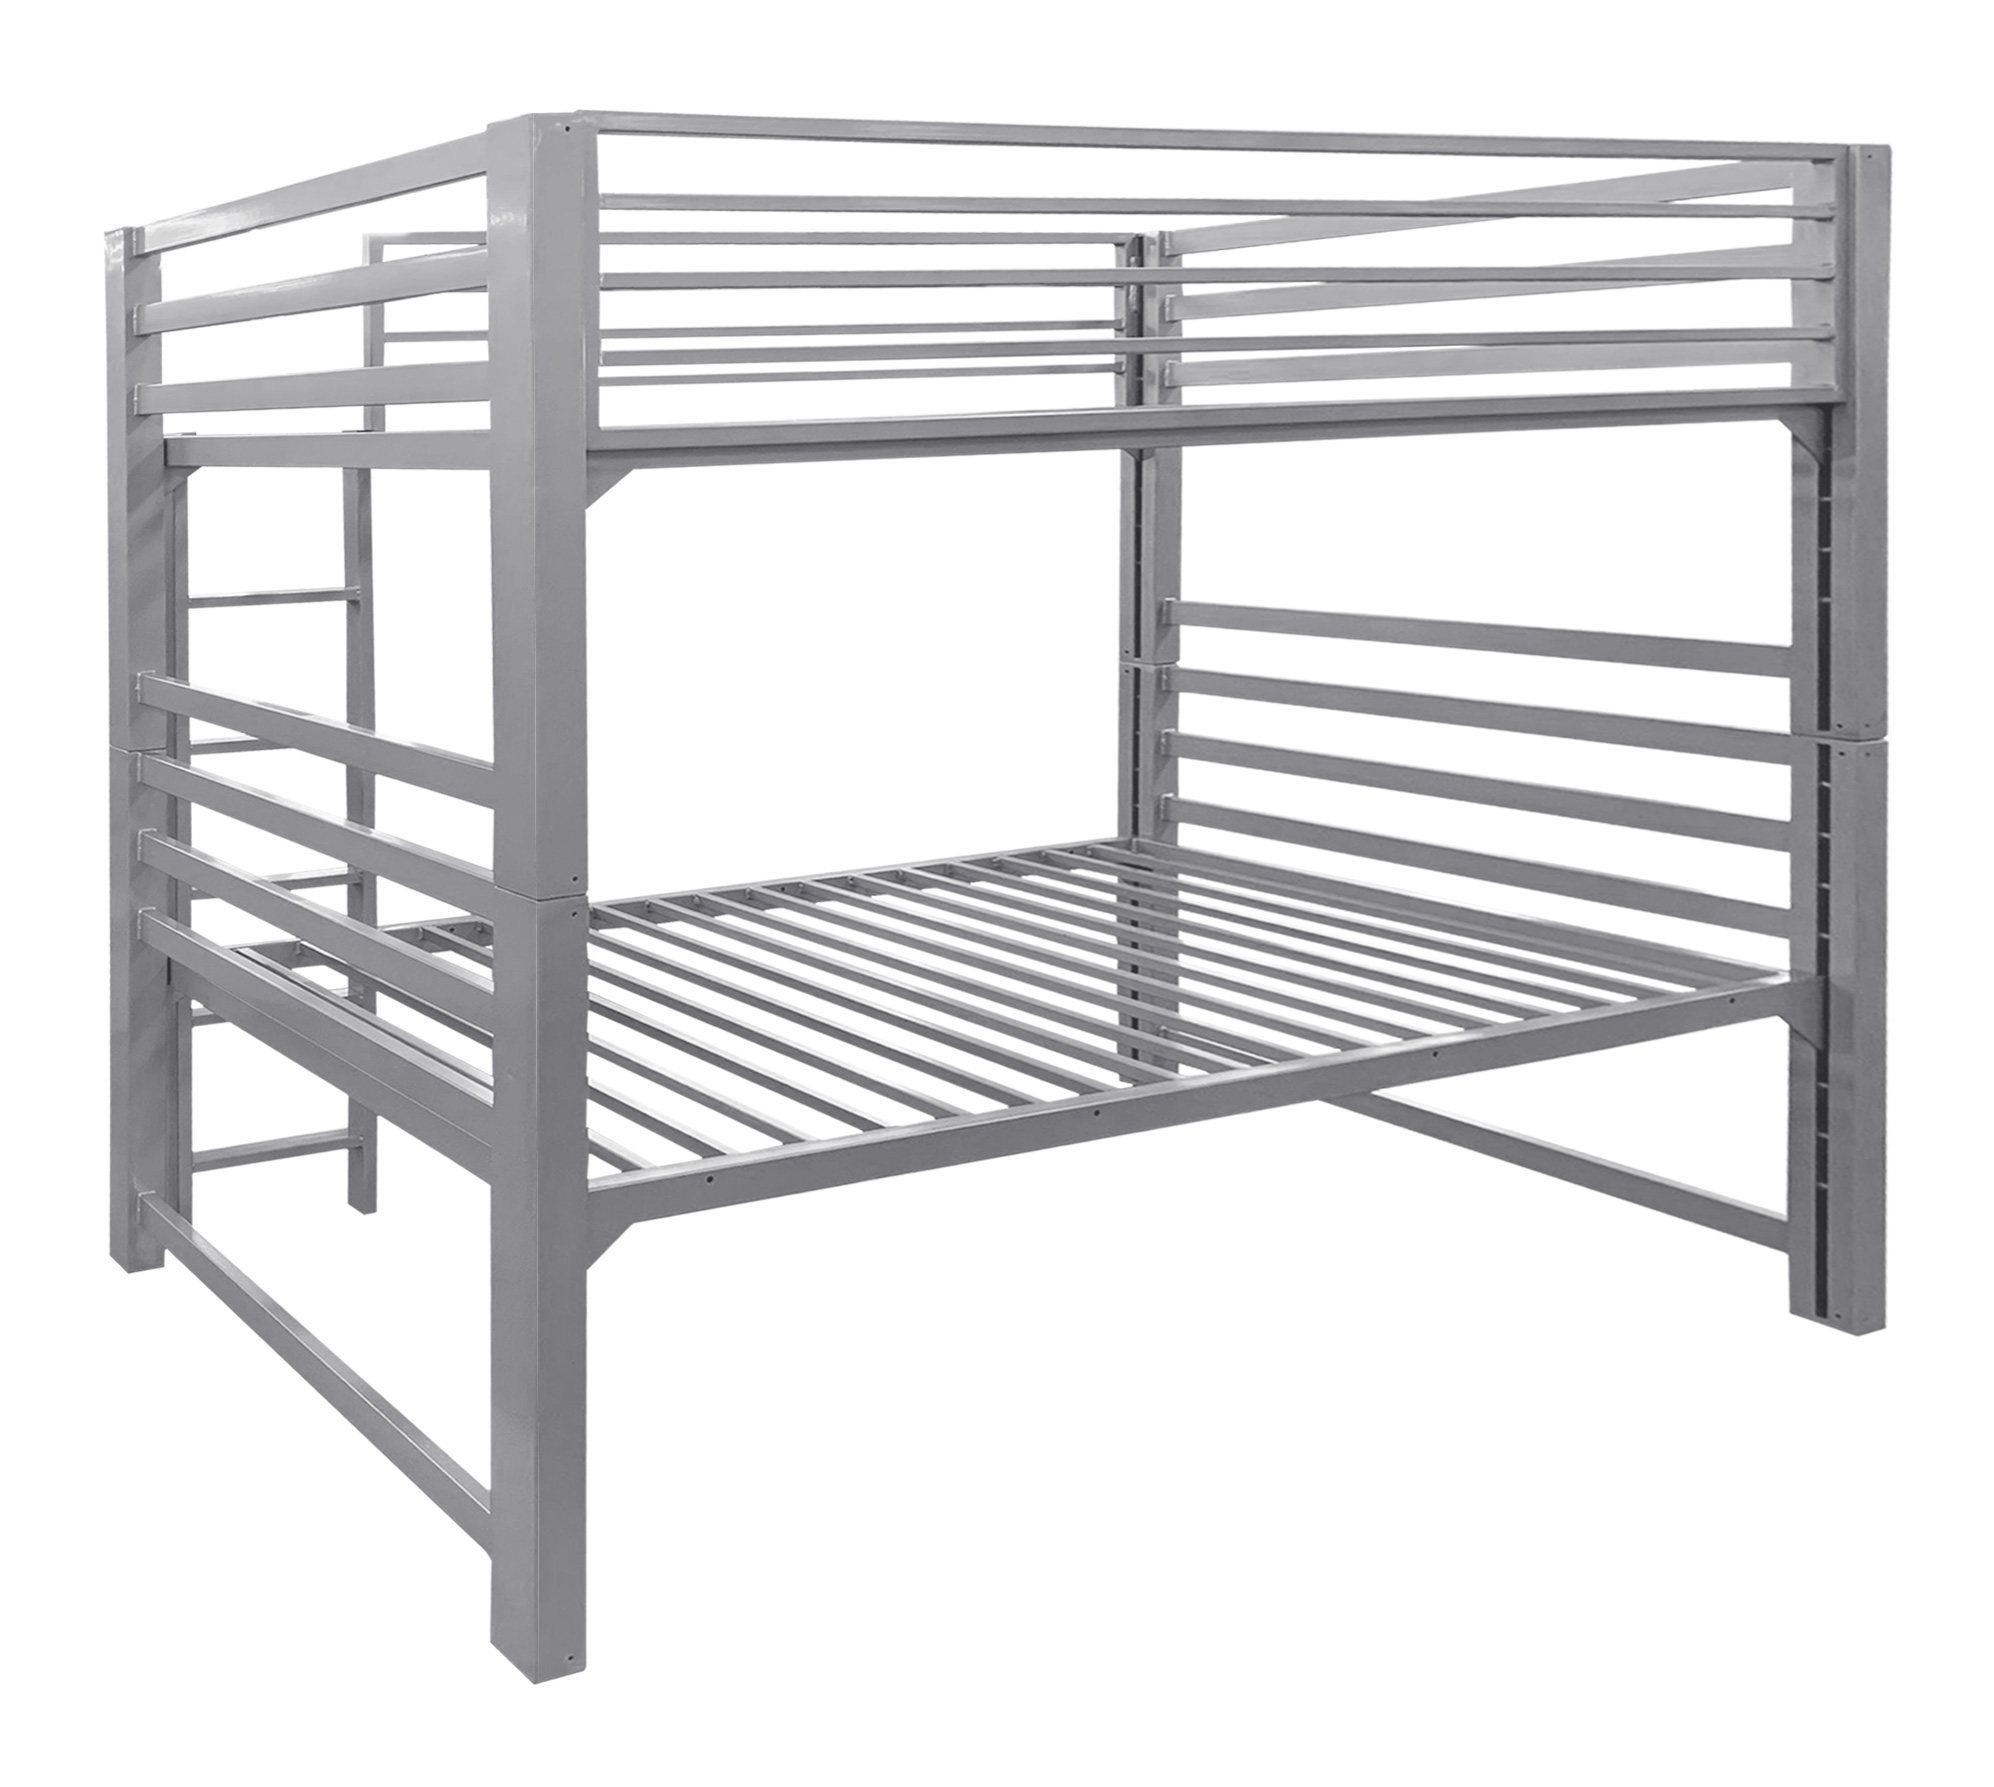 F3 Montego bunk bed student housing furniture